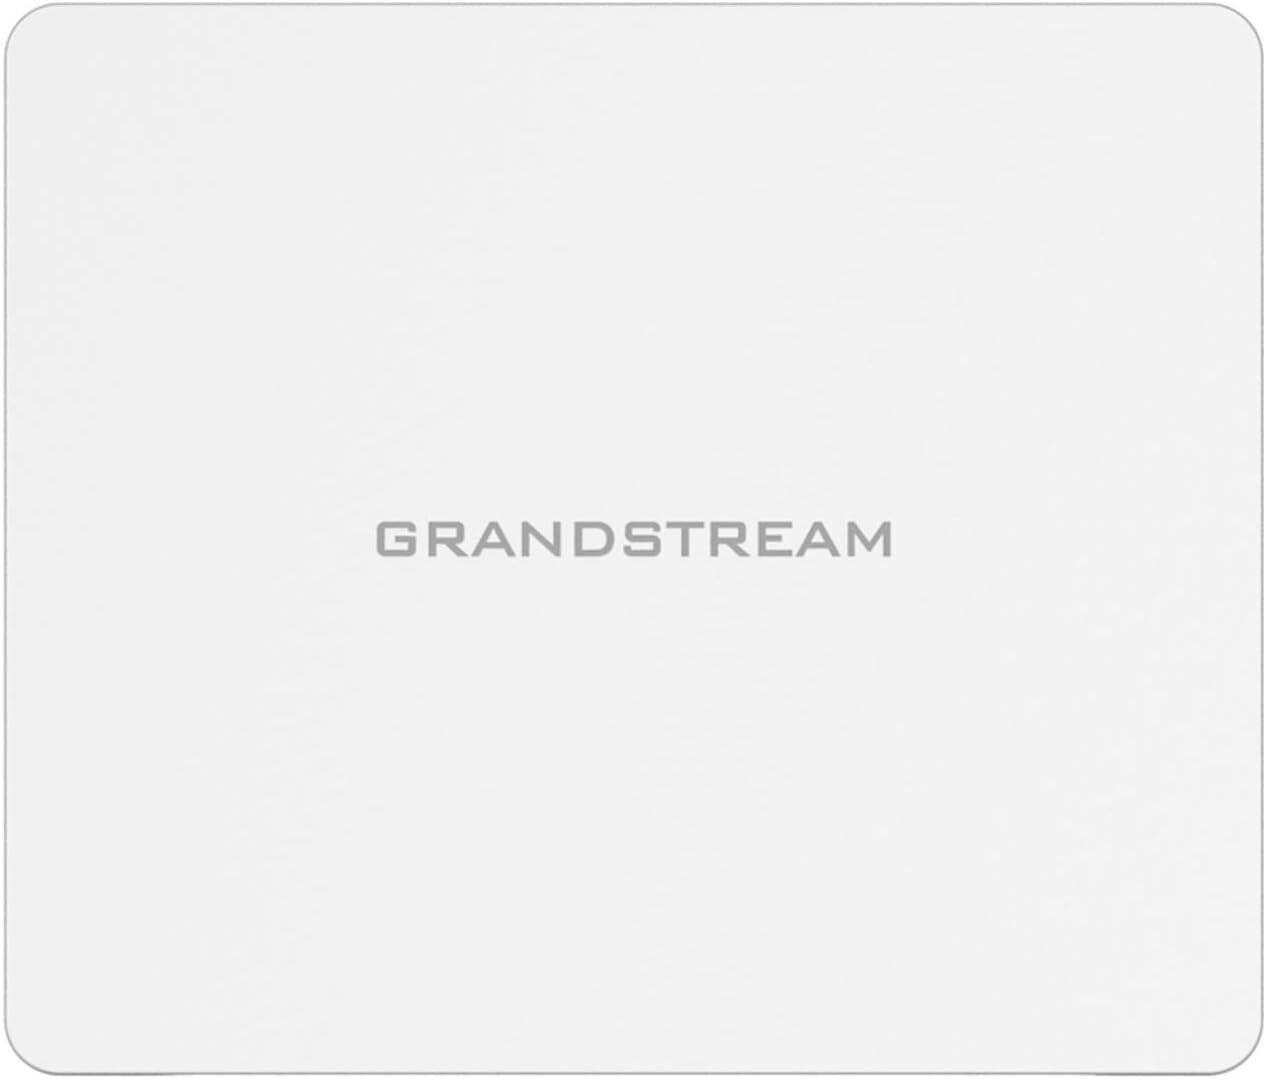 Grandstream GWN7602 5 GHz Dual-Band 802.11ac Compact WiFi Access Point - White